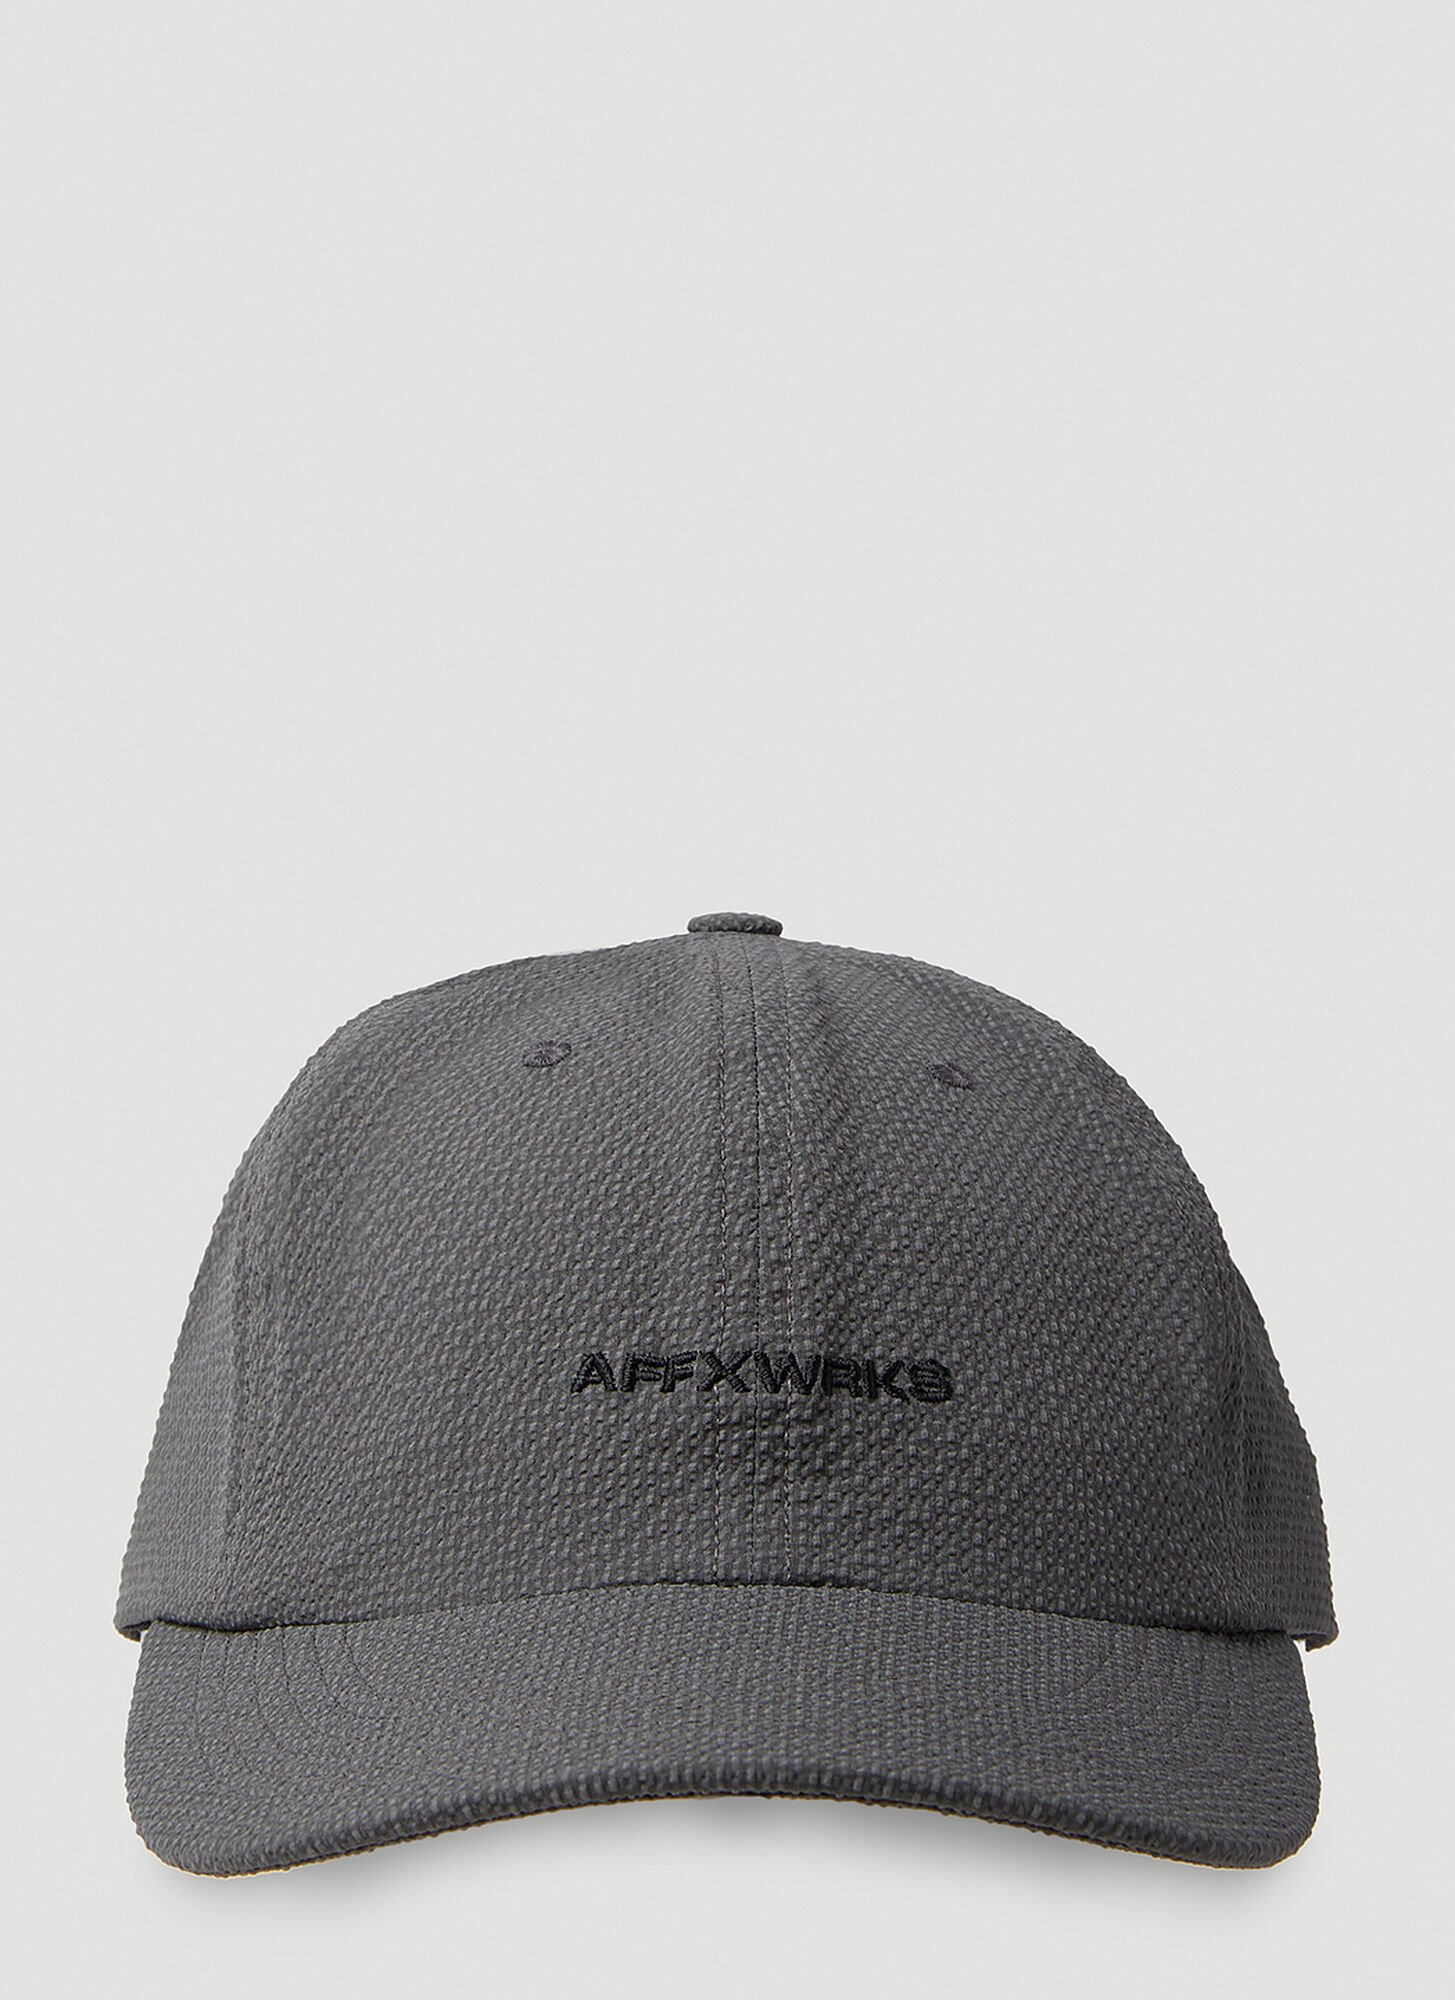 Affxwrks Textured Baseball Cap In Grey